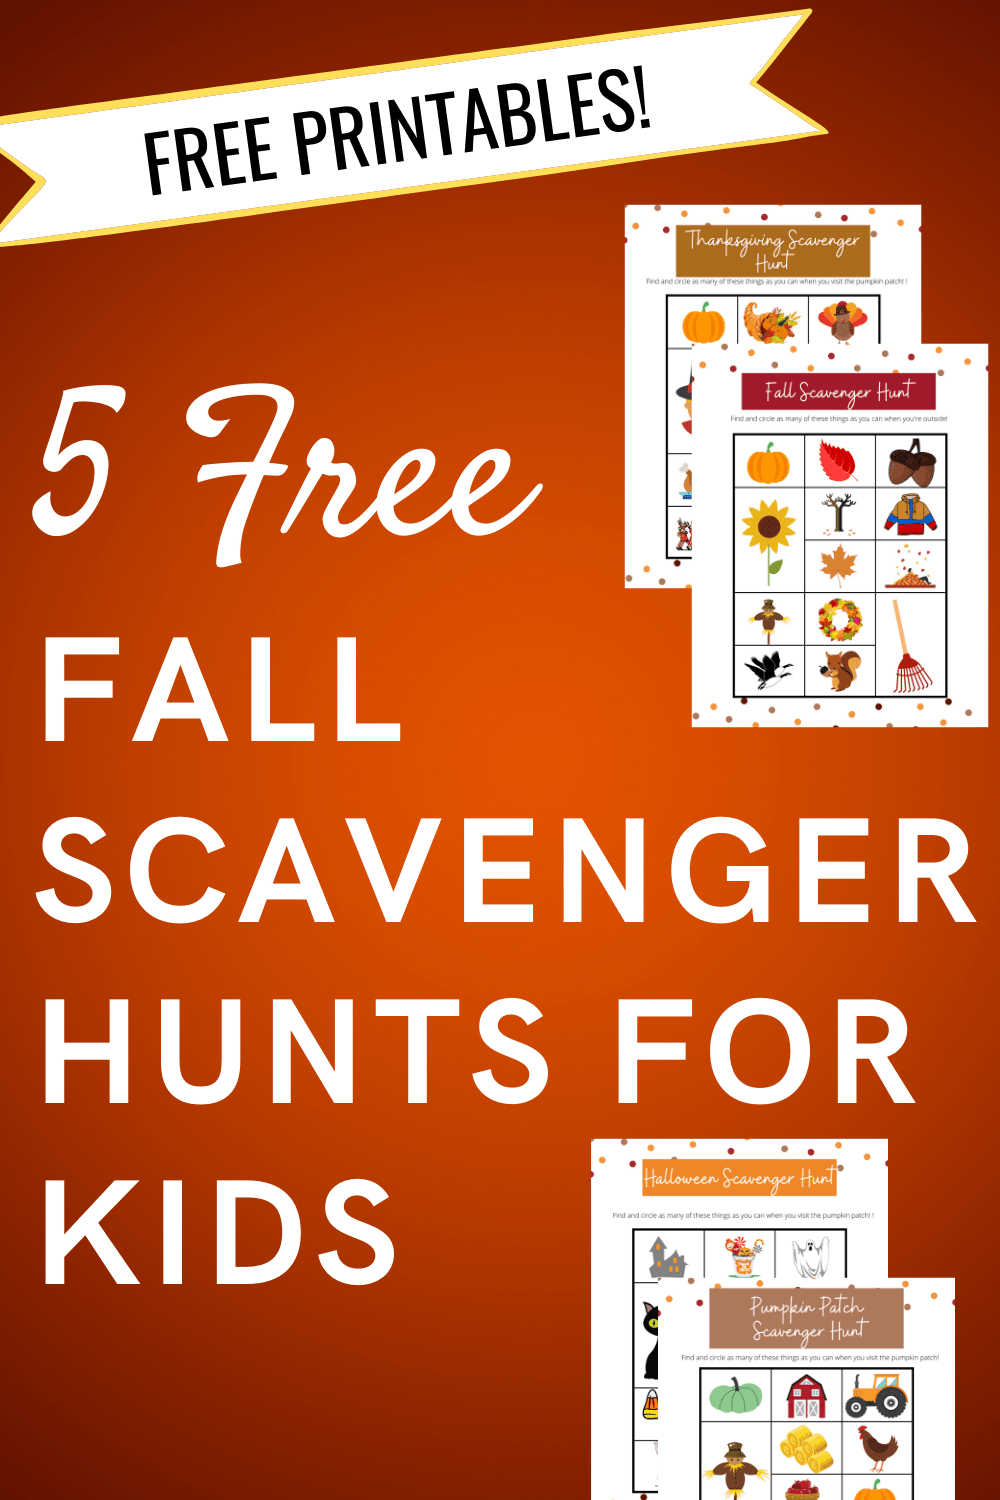 5 Fun Fall Scavenger Hunts Your Kids Will Love